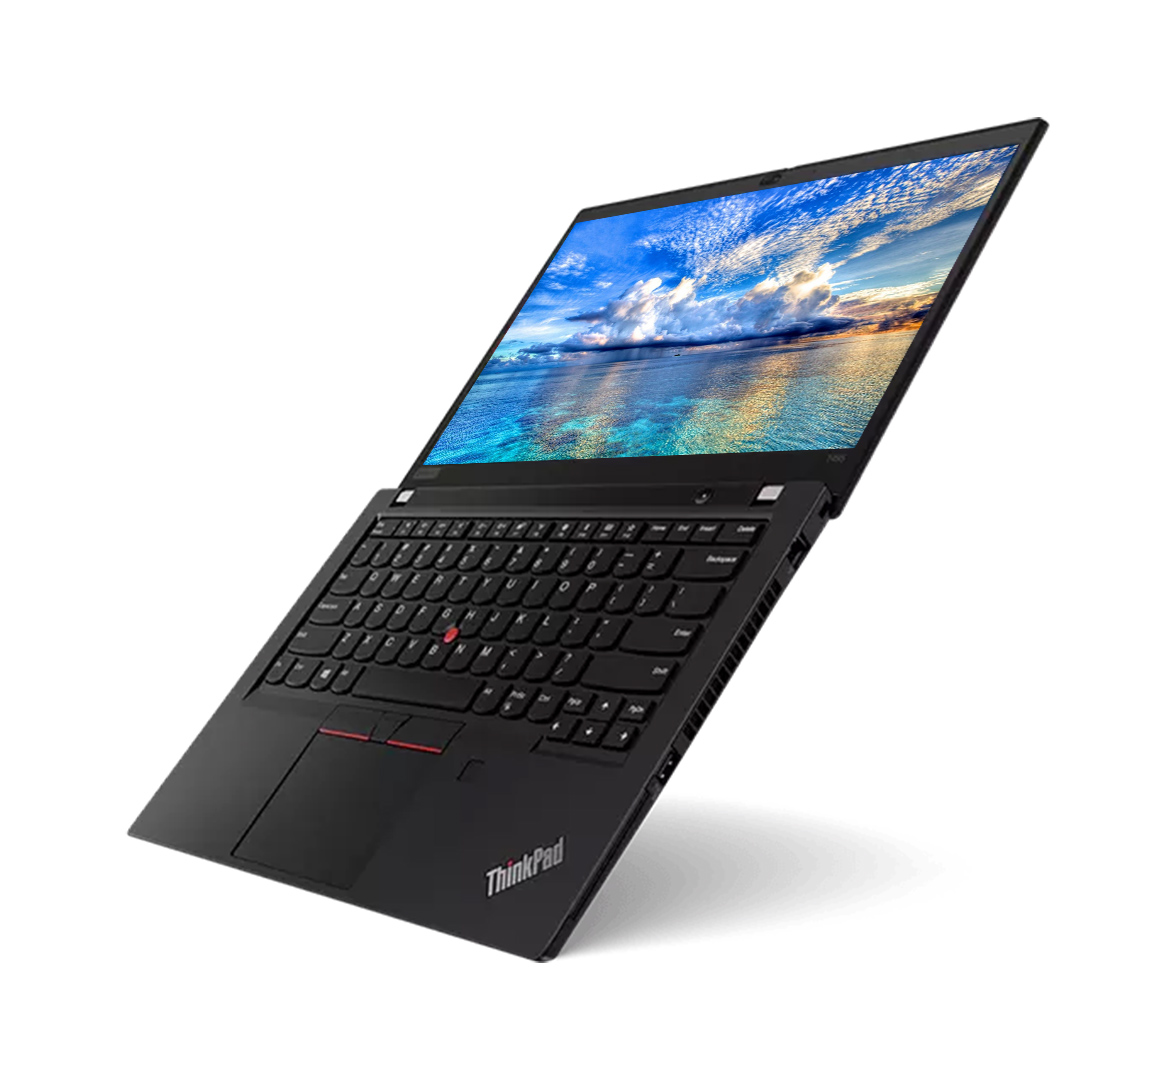 Lenovo ThinkPad T495 Business Laptop, AMD RYZEN 3 CPU, 16GB RAM, 512GB SSD, 14 inch Display, Windows 10 Pro 10 Pro, Refurbished Laptop